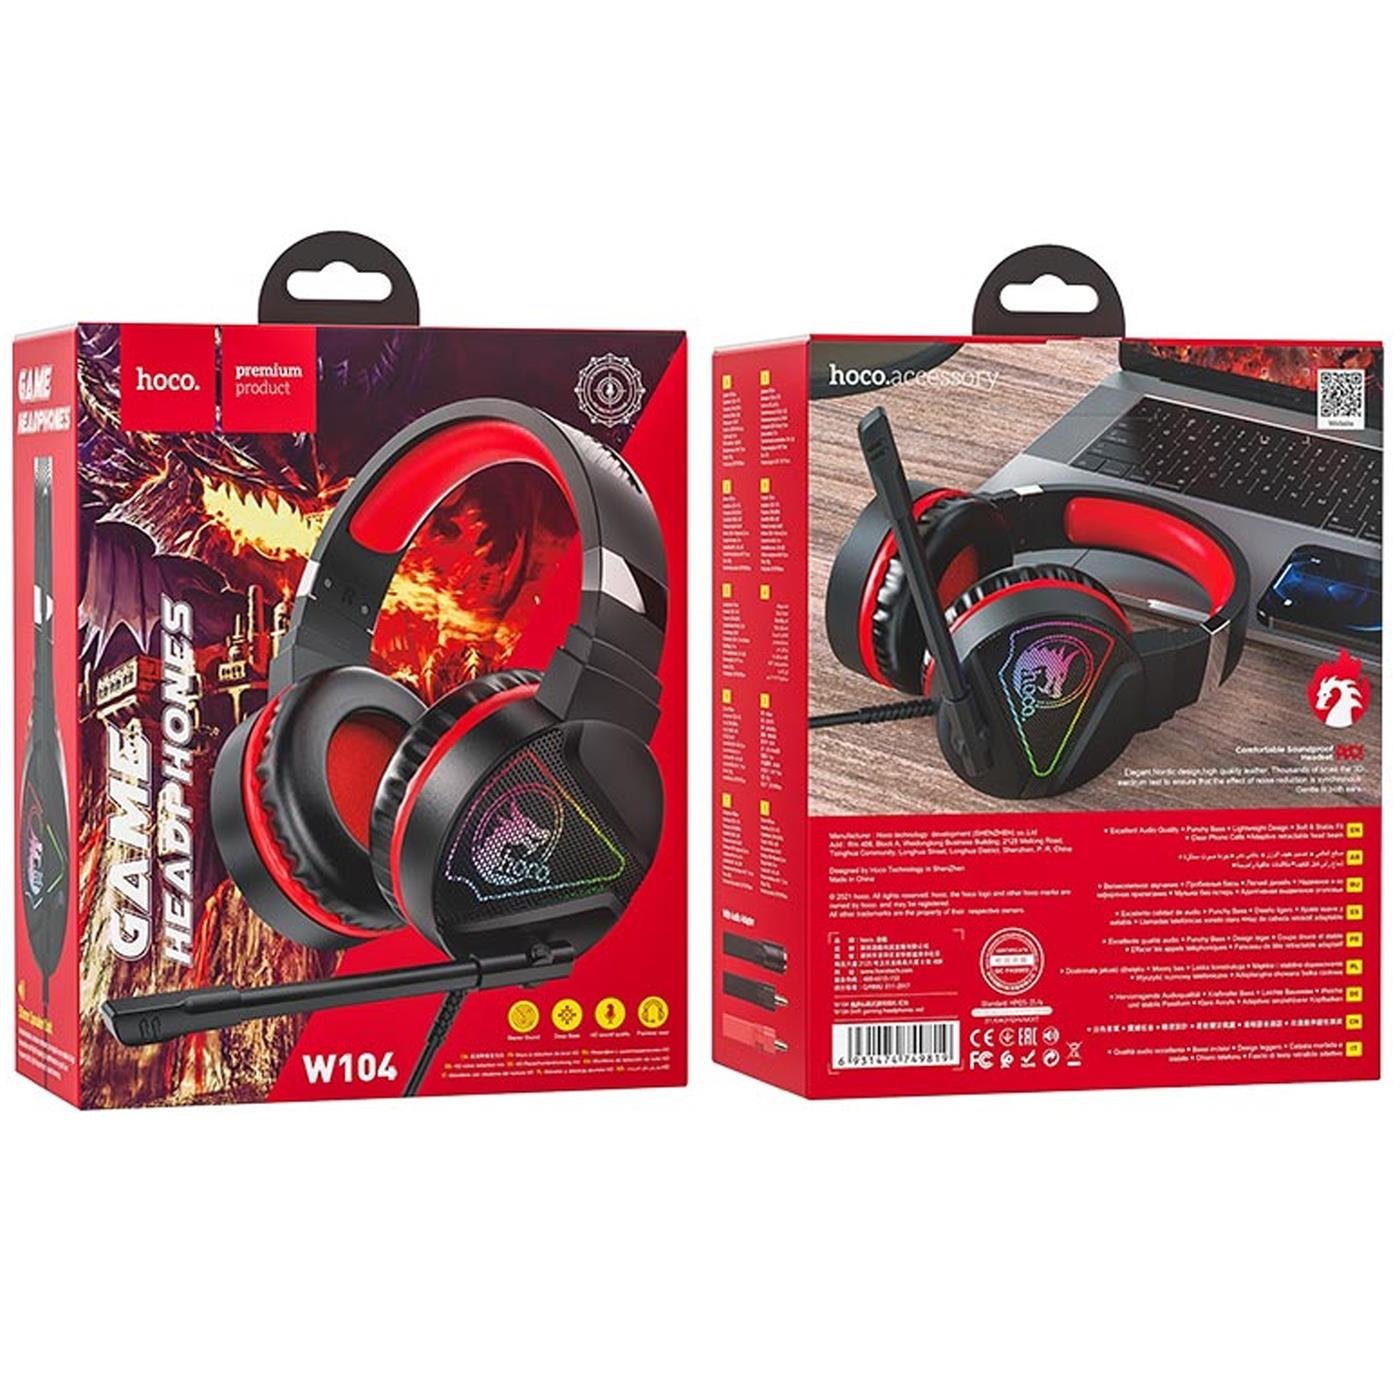 HOCO W104 Gaming PC-Headset Beleuchtung) Rot (Stylische Mikrofon und Gaming Stereo LED Kopfhörer mit